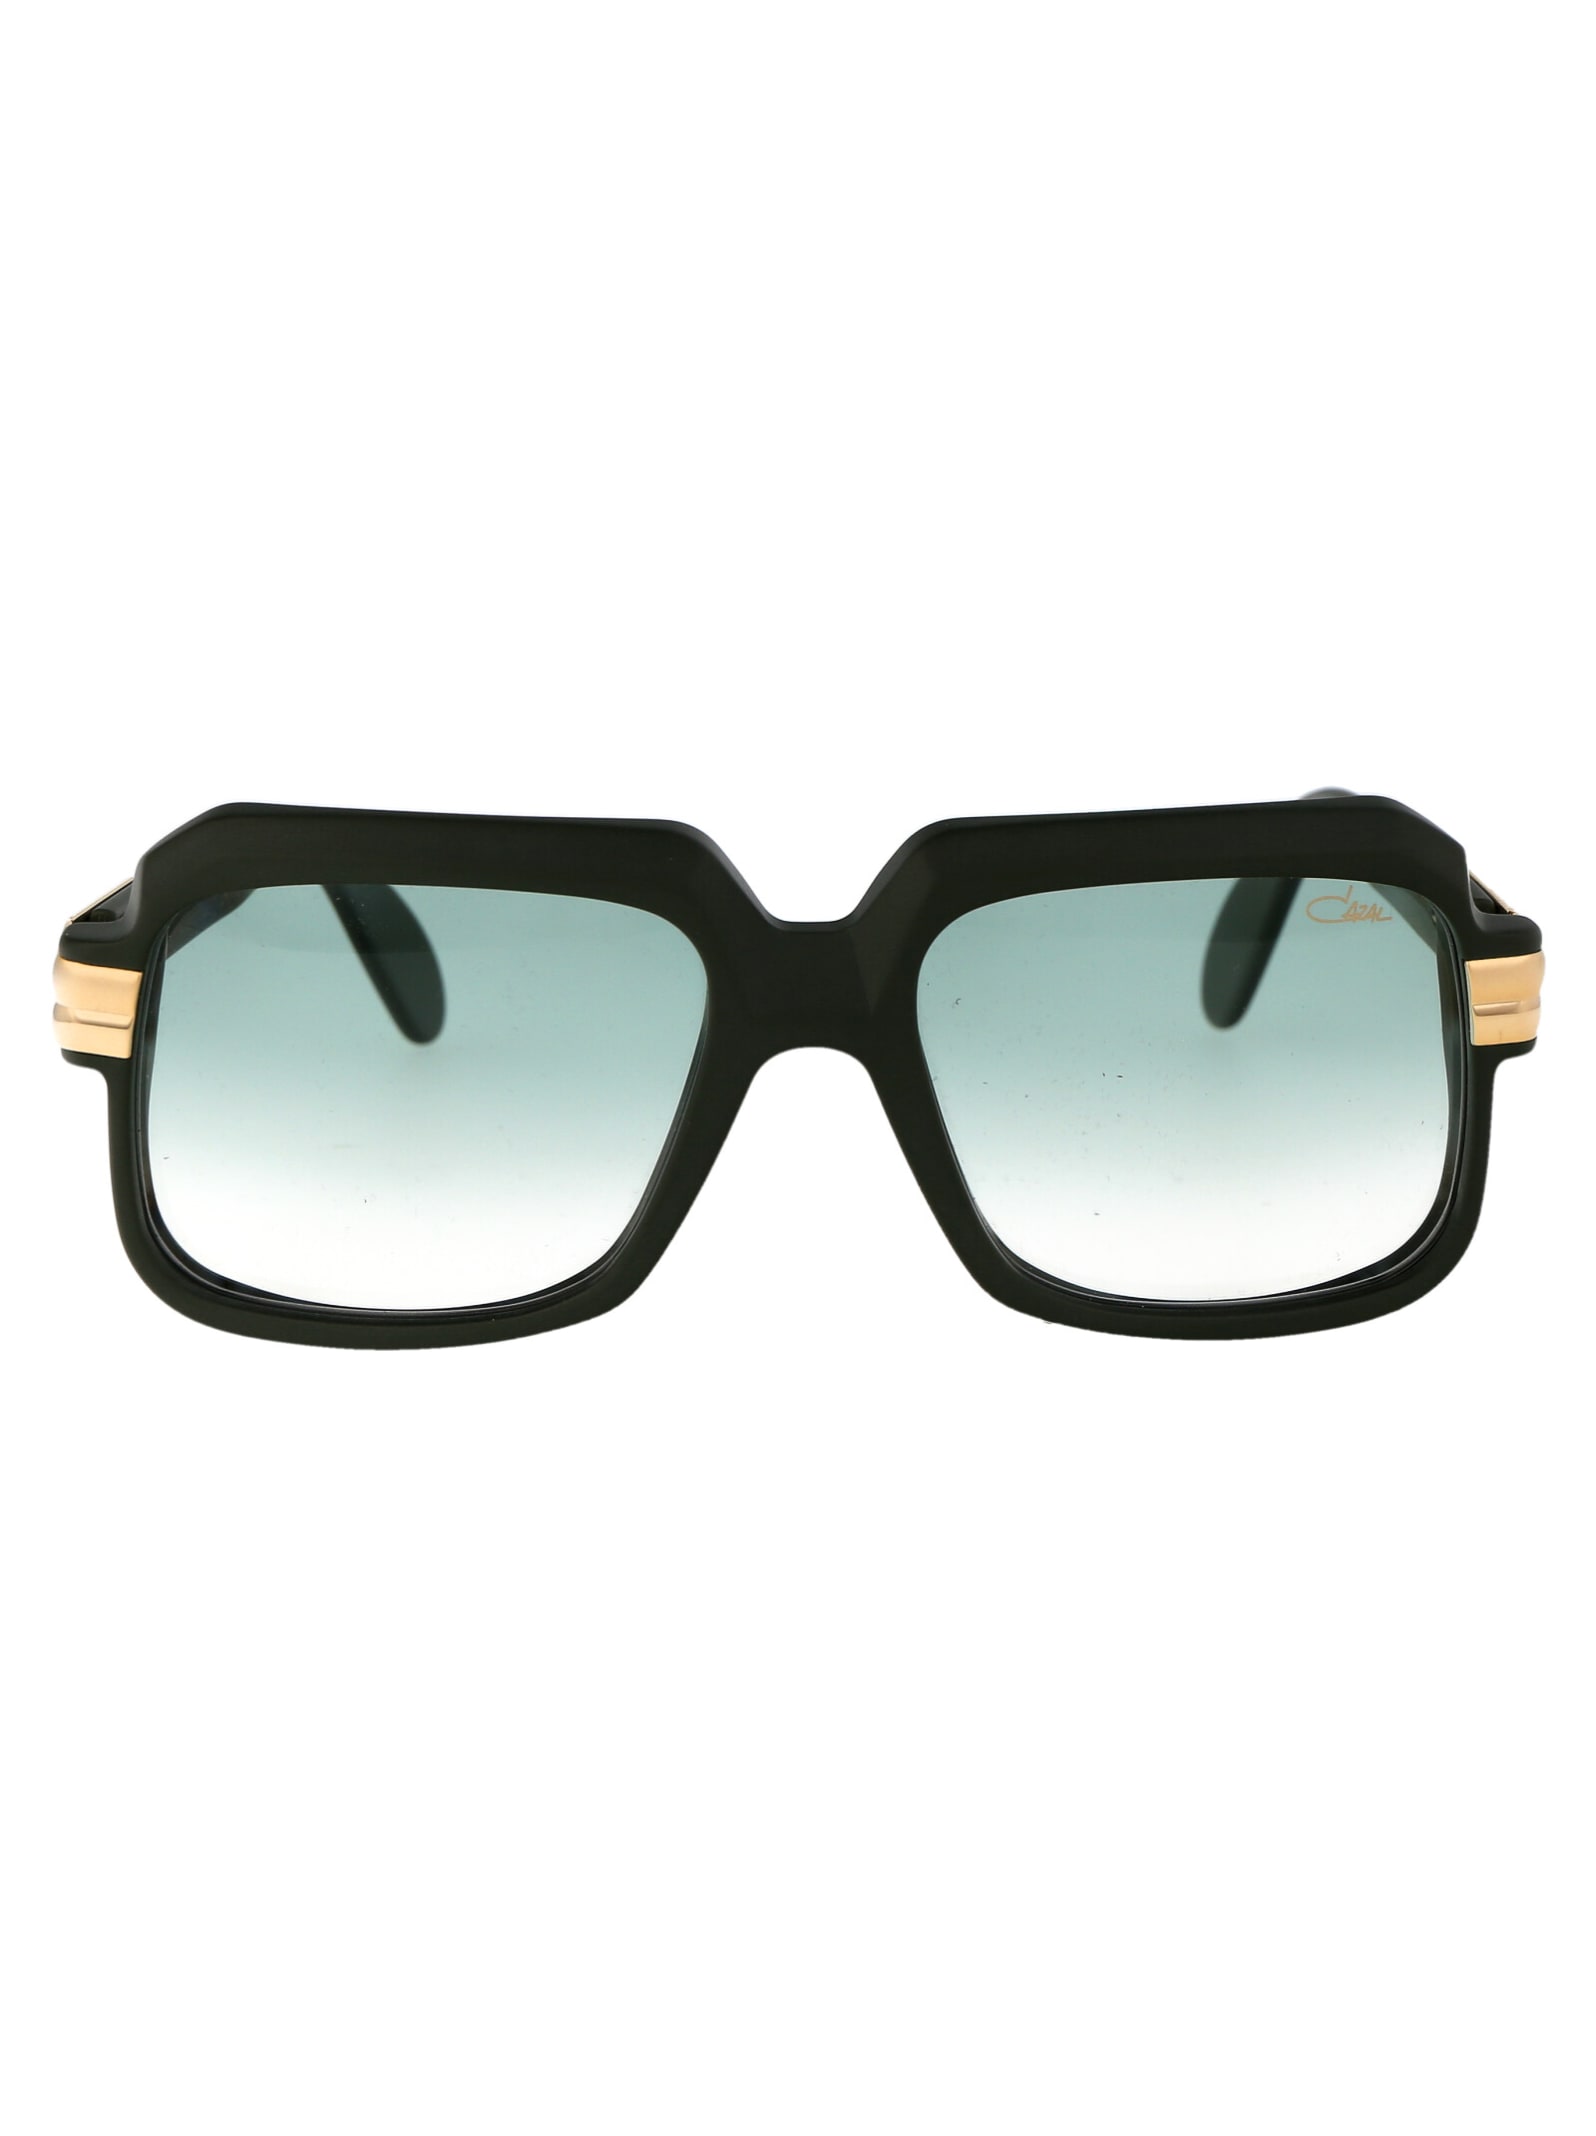 Cazal Mod. 607/3 Sunglasses In 050 Green